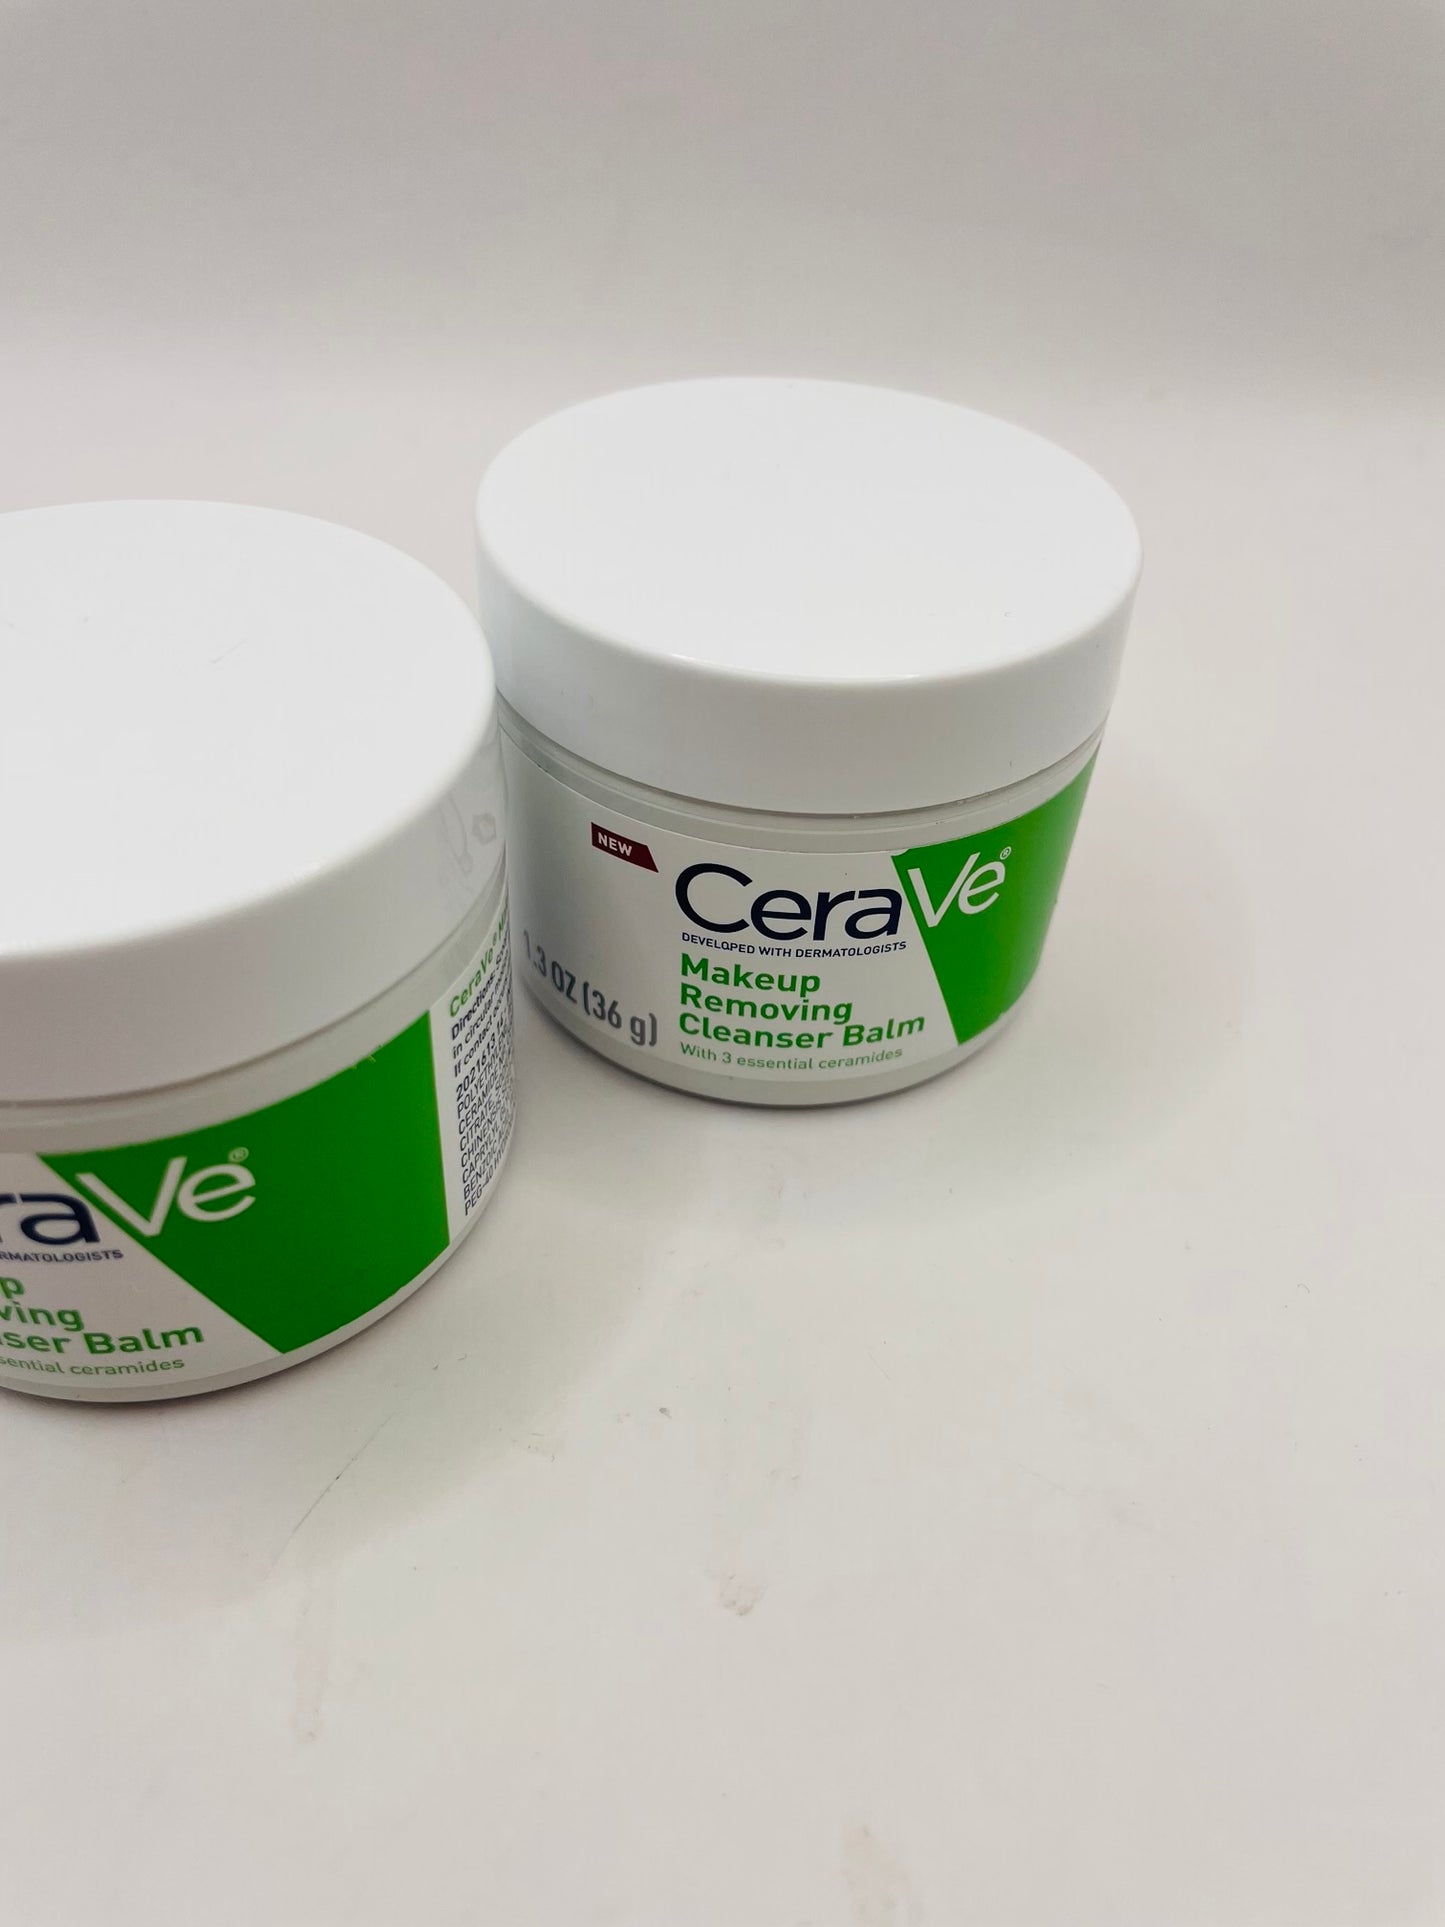 Cerave make up removing cleanser balm